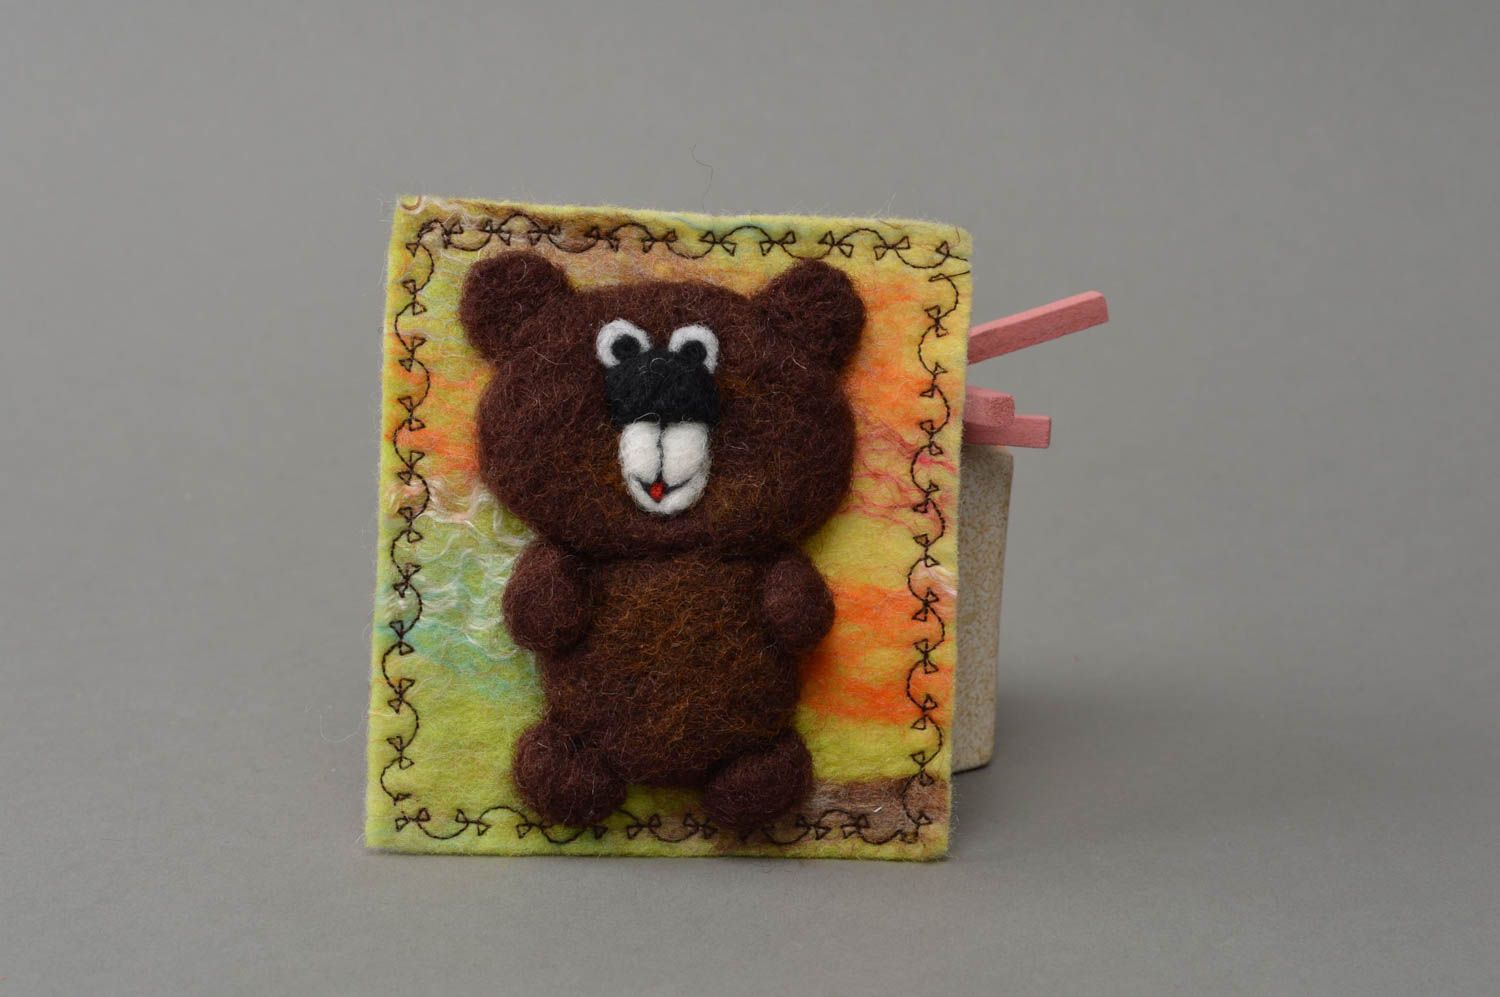 Handmade soft fridge magnet toy for children interior decor ideas for kitchen photo 1